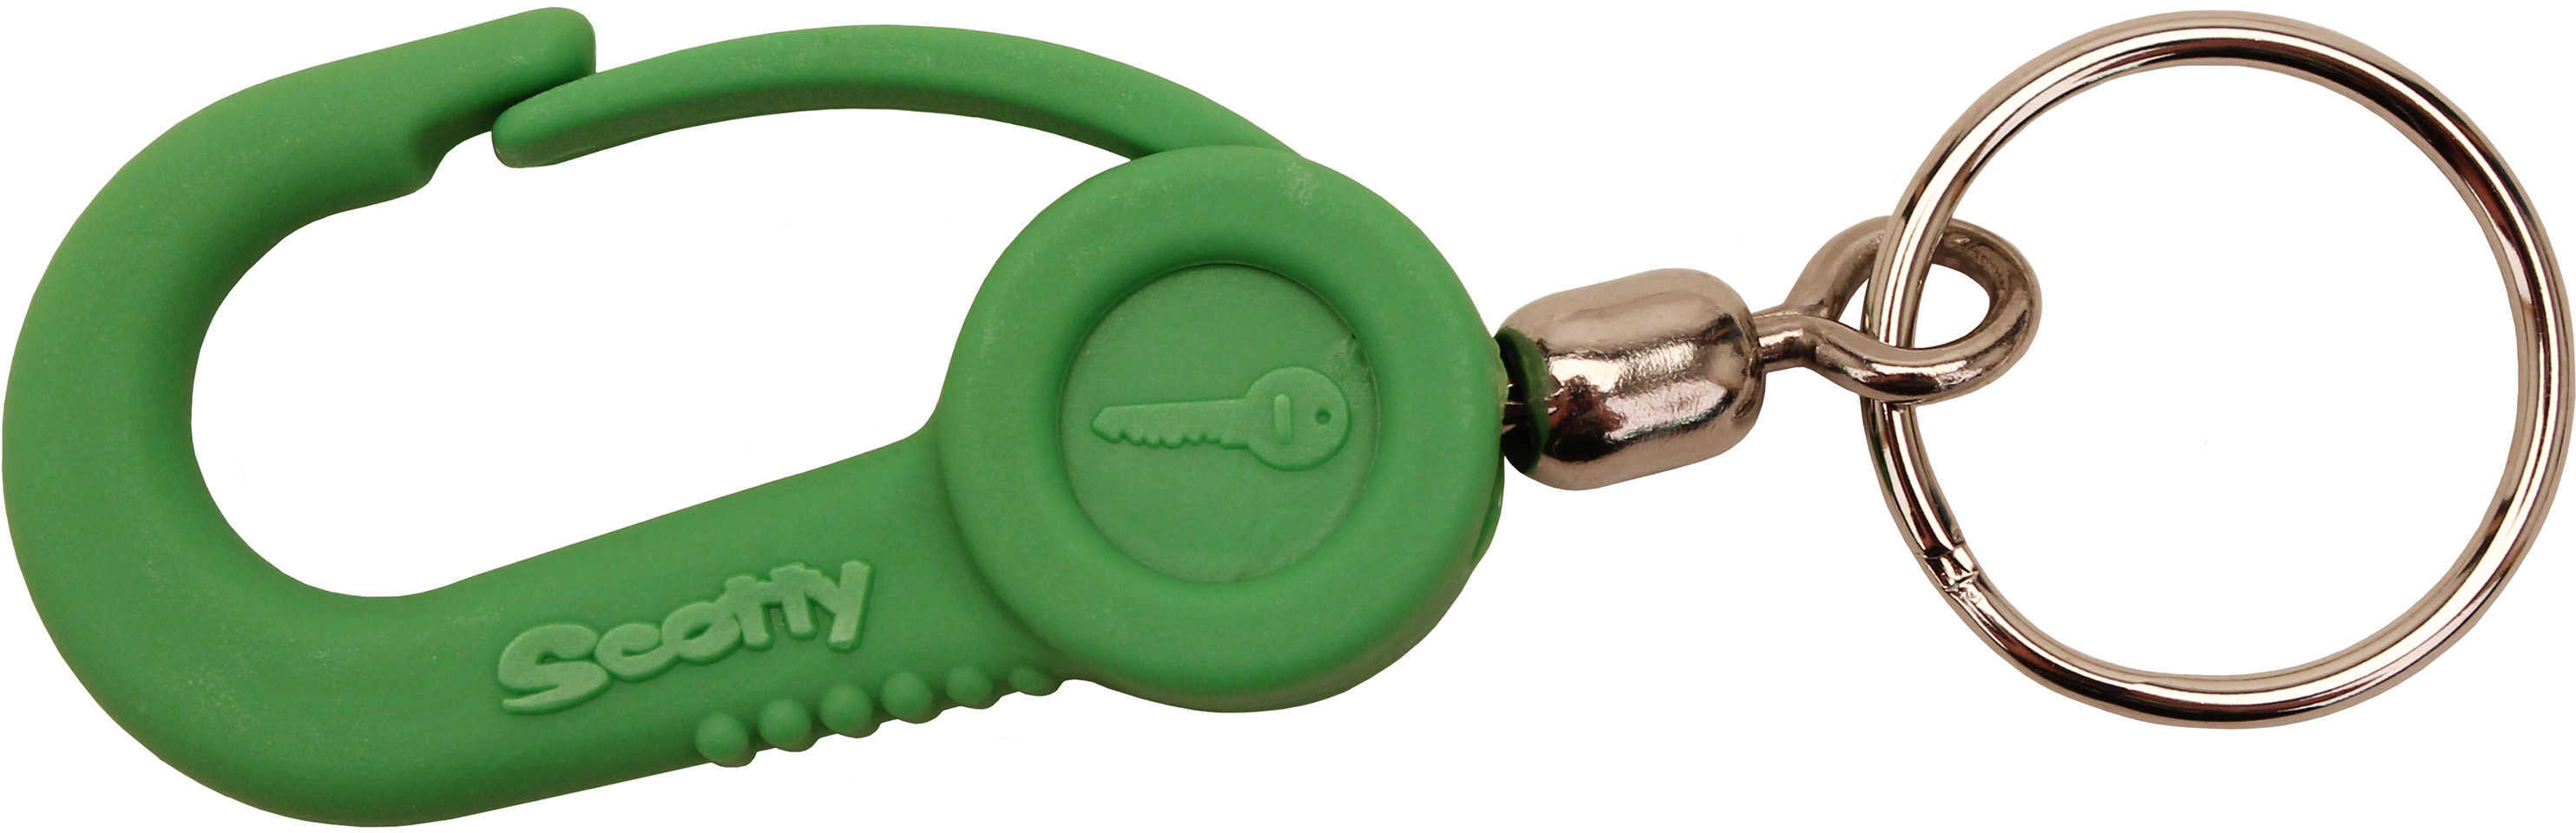 Scotty Snap Hook Key Chain Green Md: 3010-GR